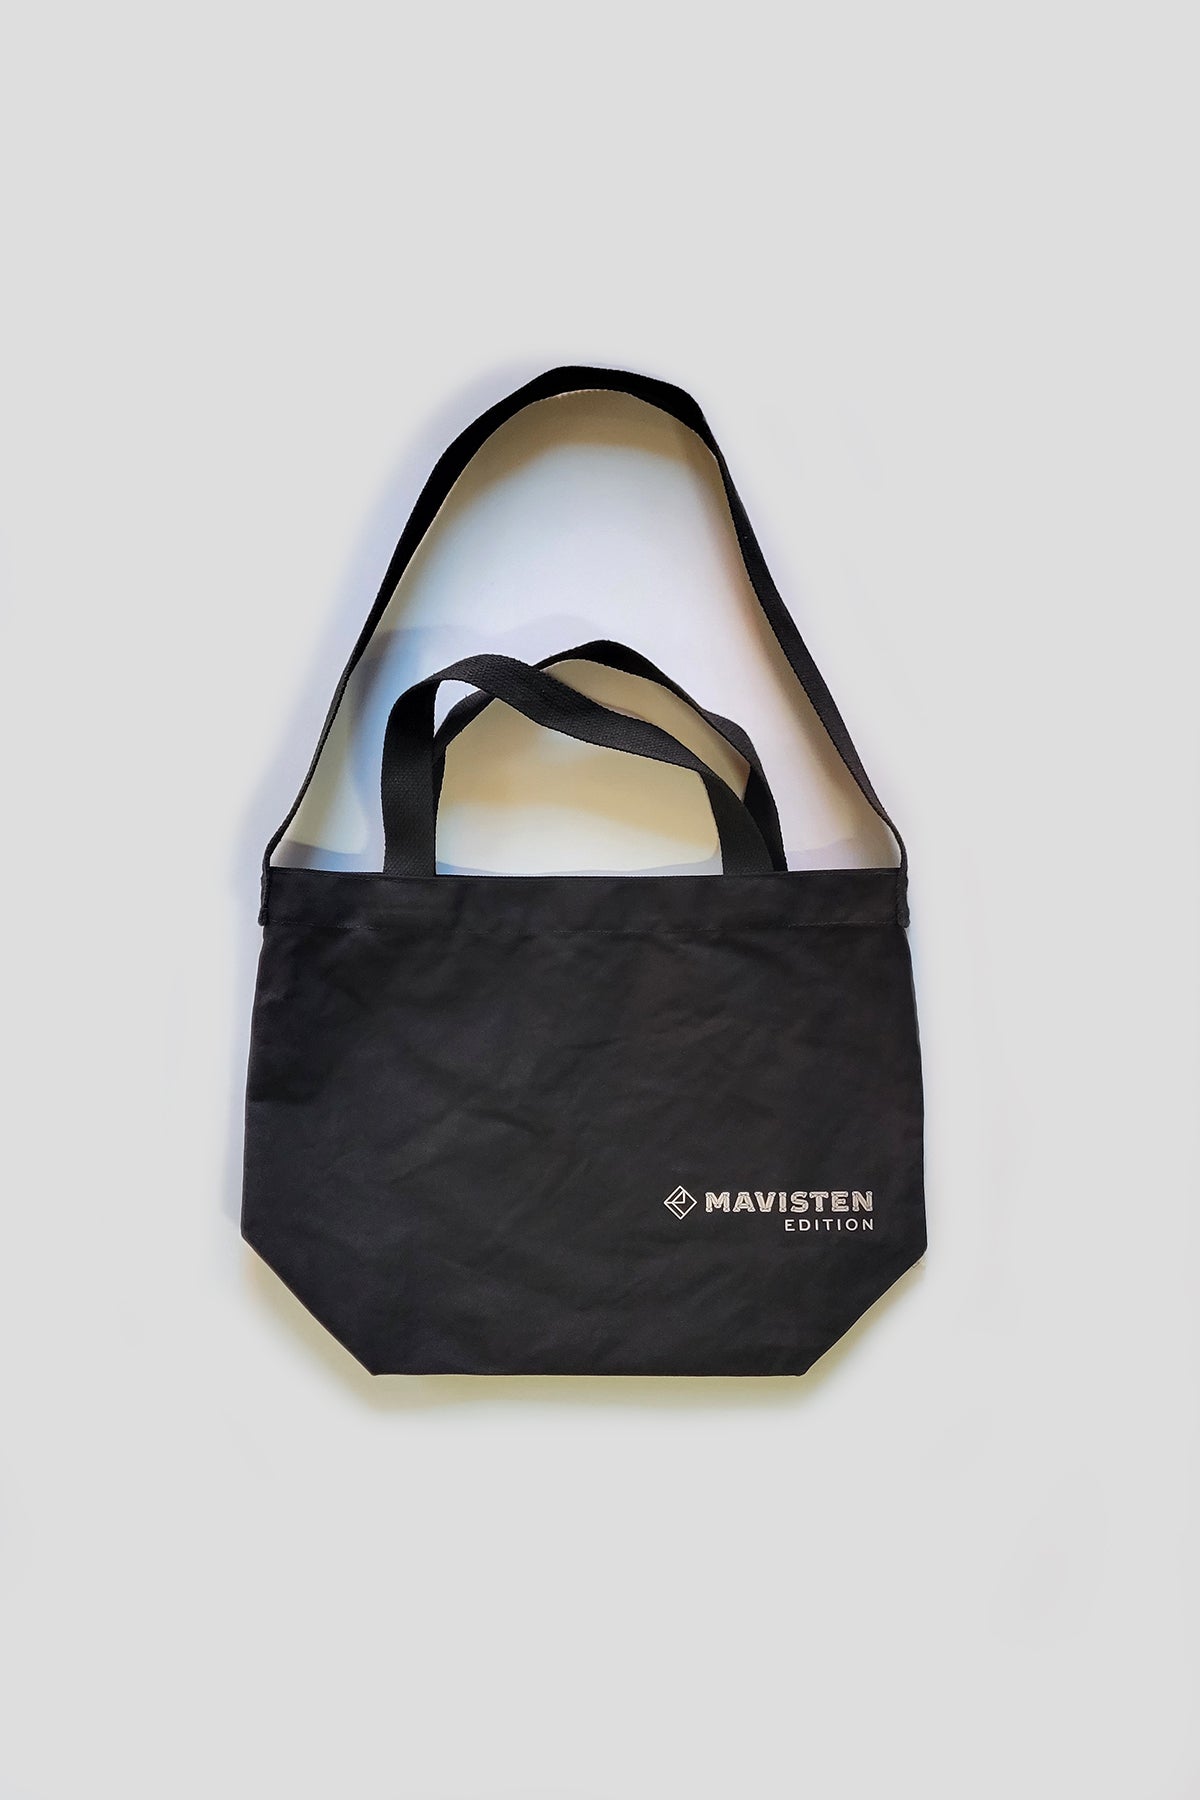 Mavisten Edition Canvas Tote Bag